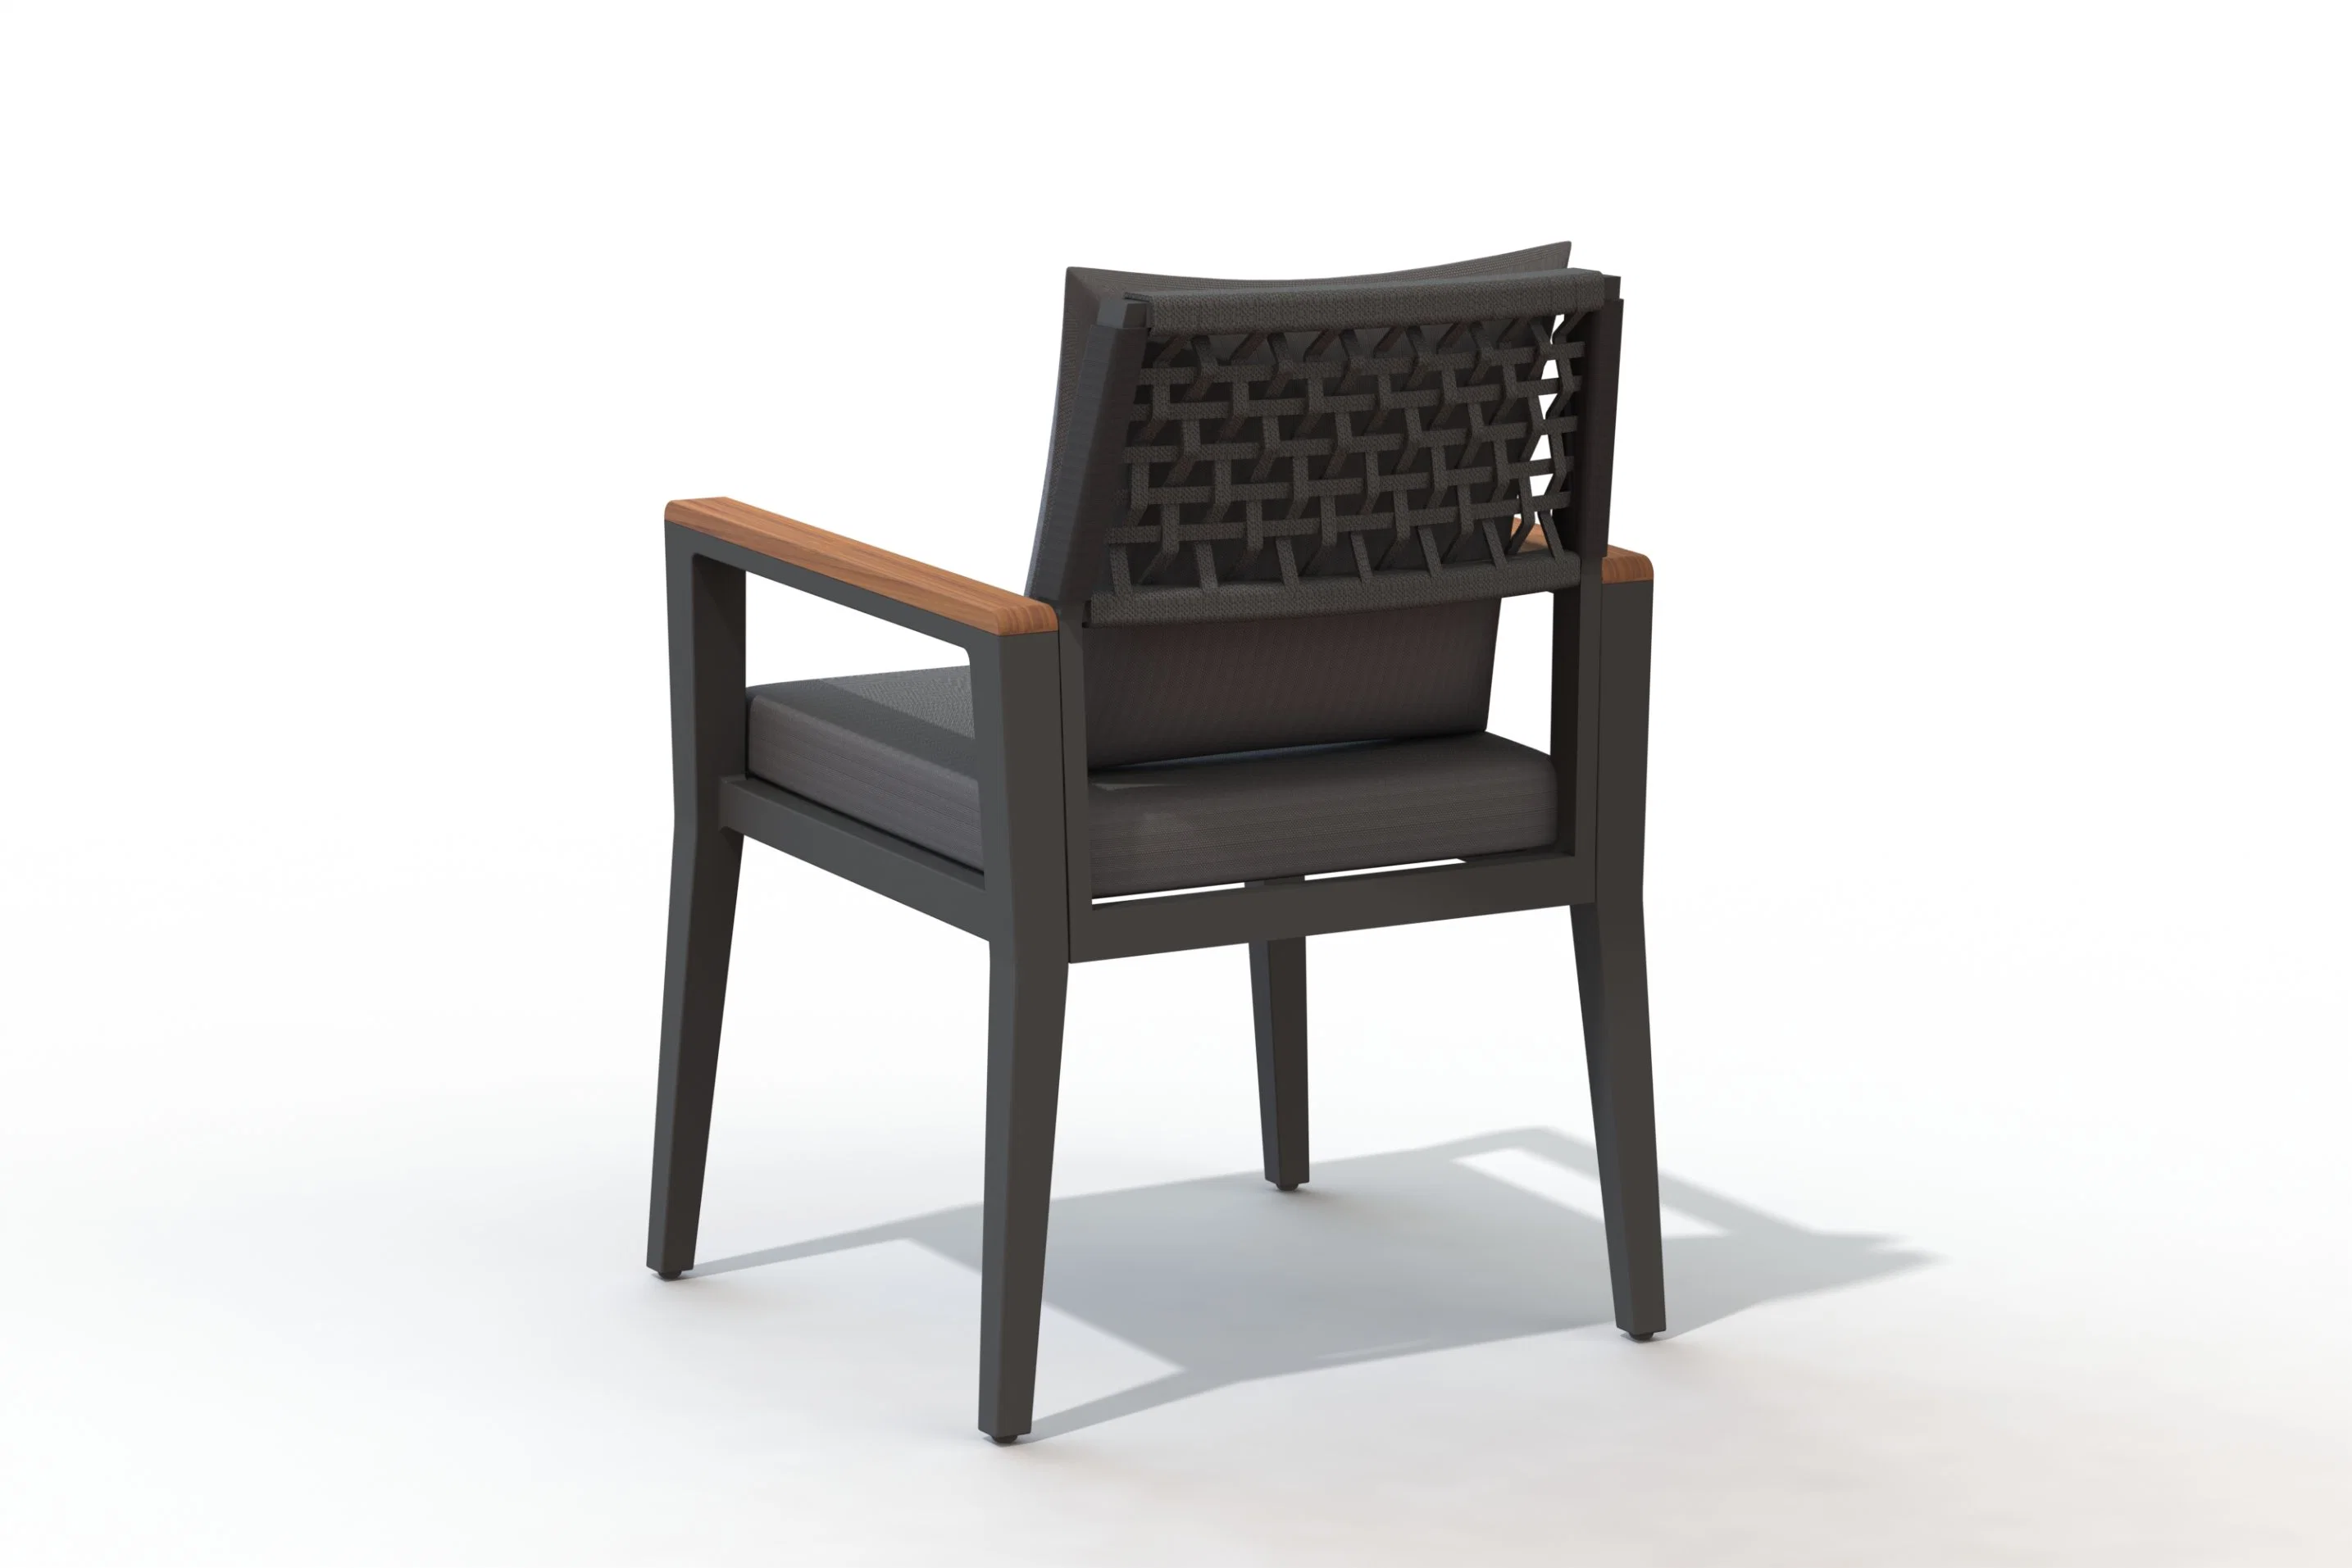 Modern Garden Sets Outdoor Teak Table Rattan Furniture Chair Suits